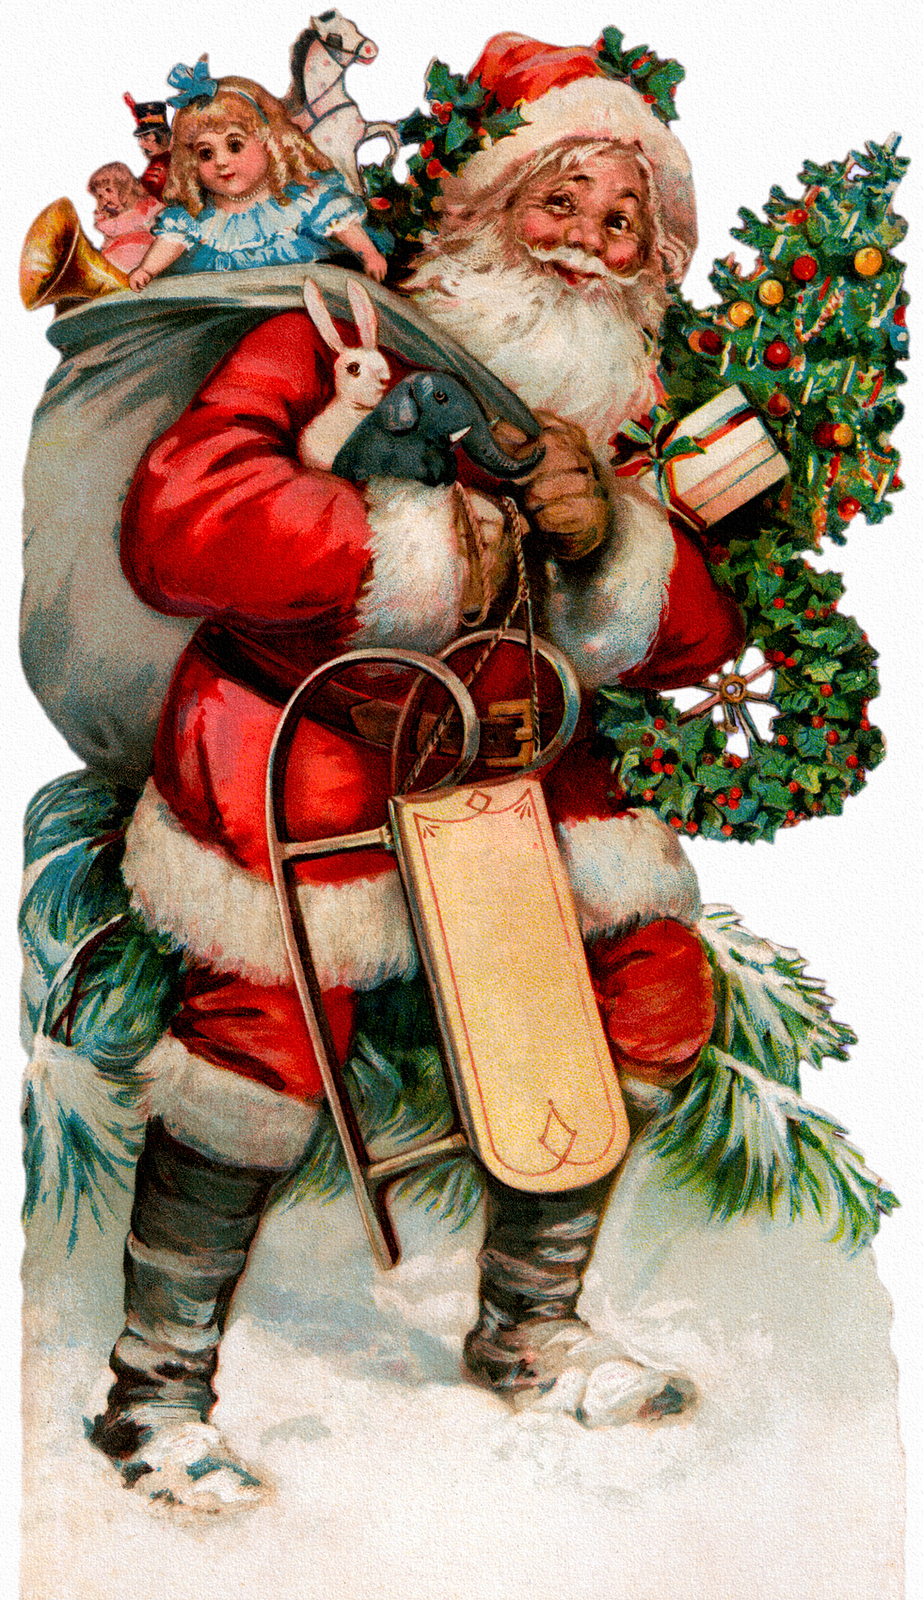 Vintage Santa Claus Cards And A Holiday Wallpaper The Long Goodbye